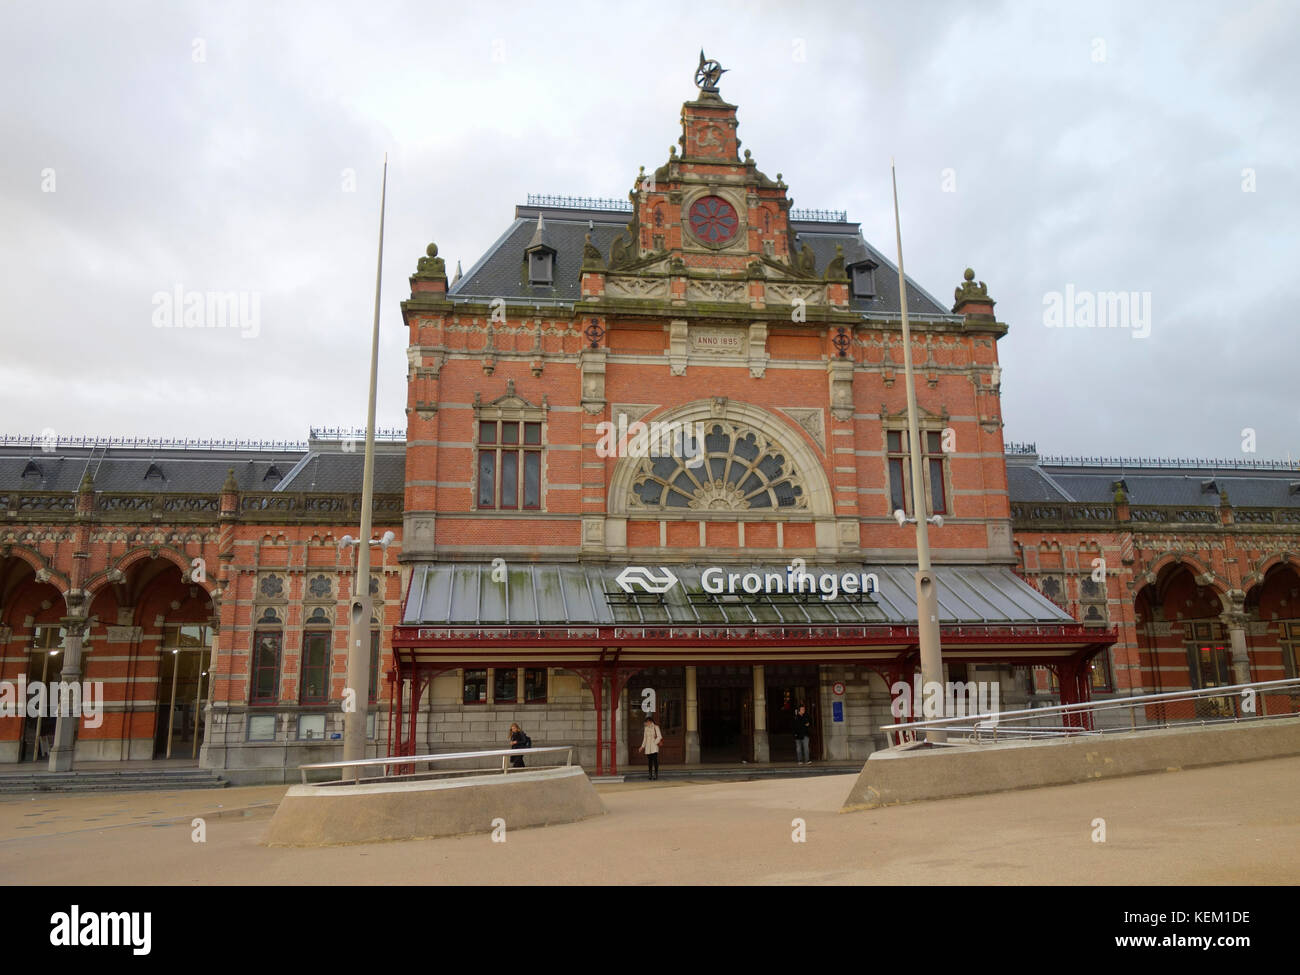 Groningen railway station, Groningen, The Netherlands Stock Photo